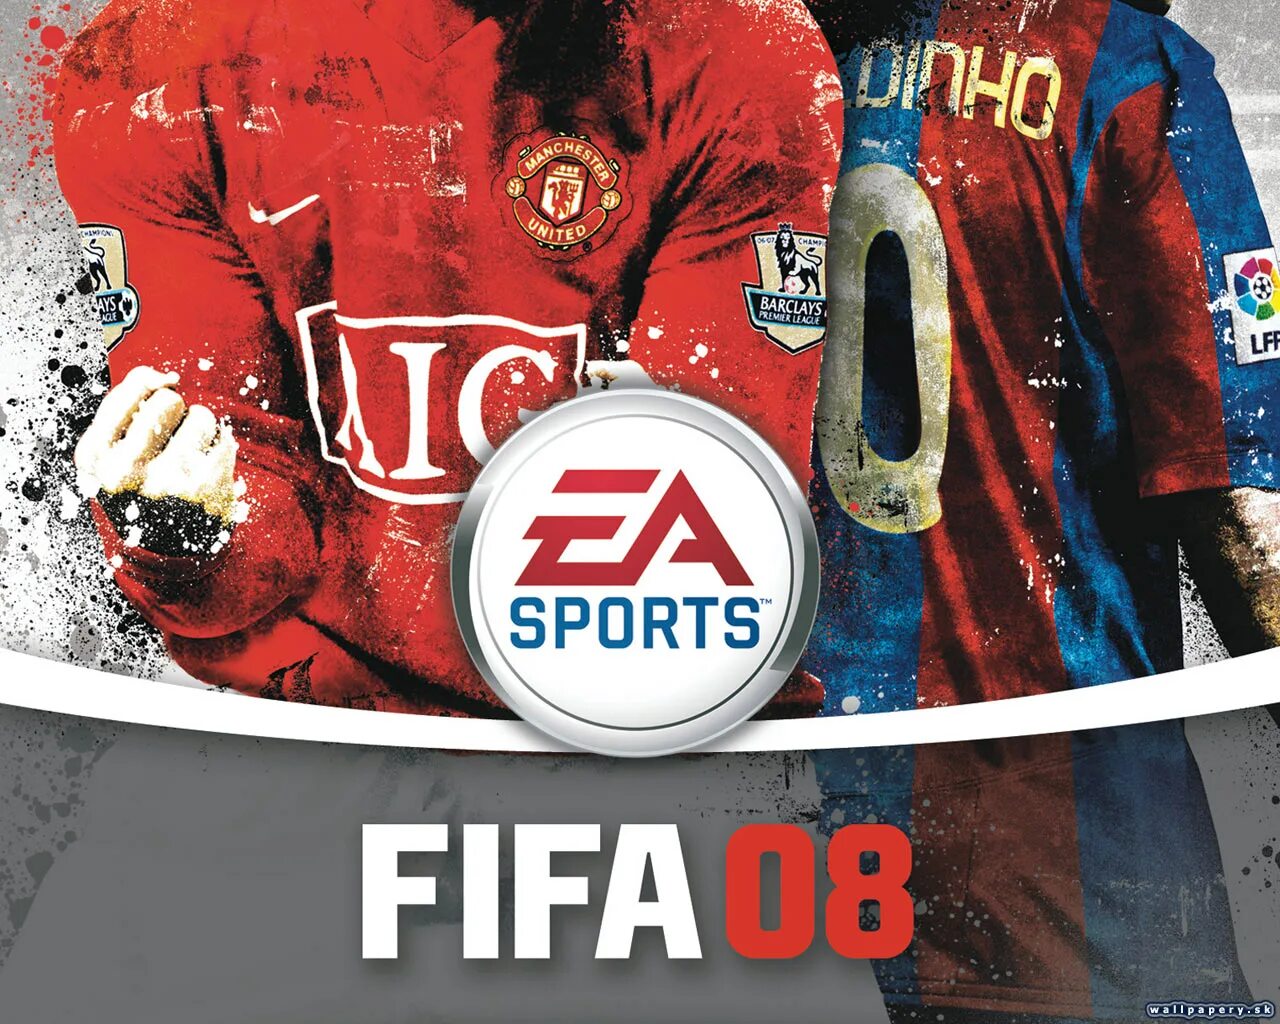 Fifa ost. FIFA 08 обложка. ФИФА 2008 обложка. Заставки ФИФА 08. FIFA 08 обложка PC.